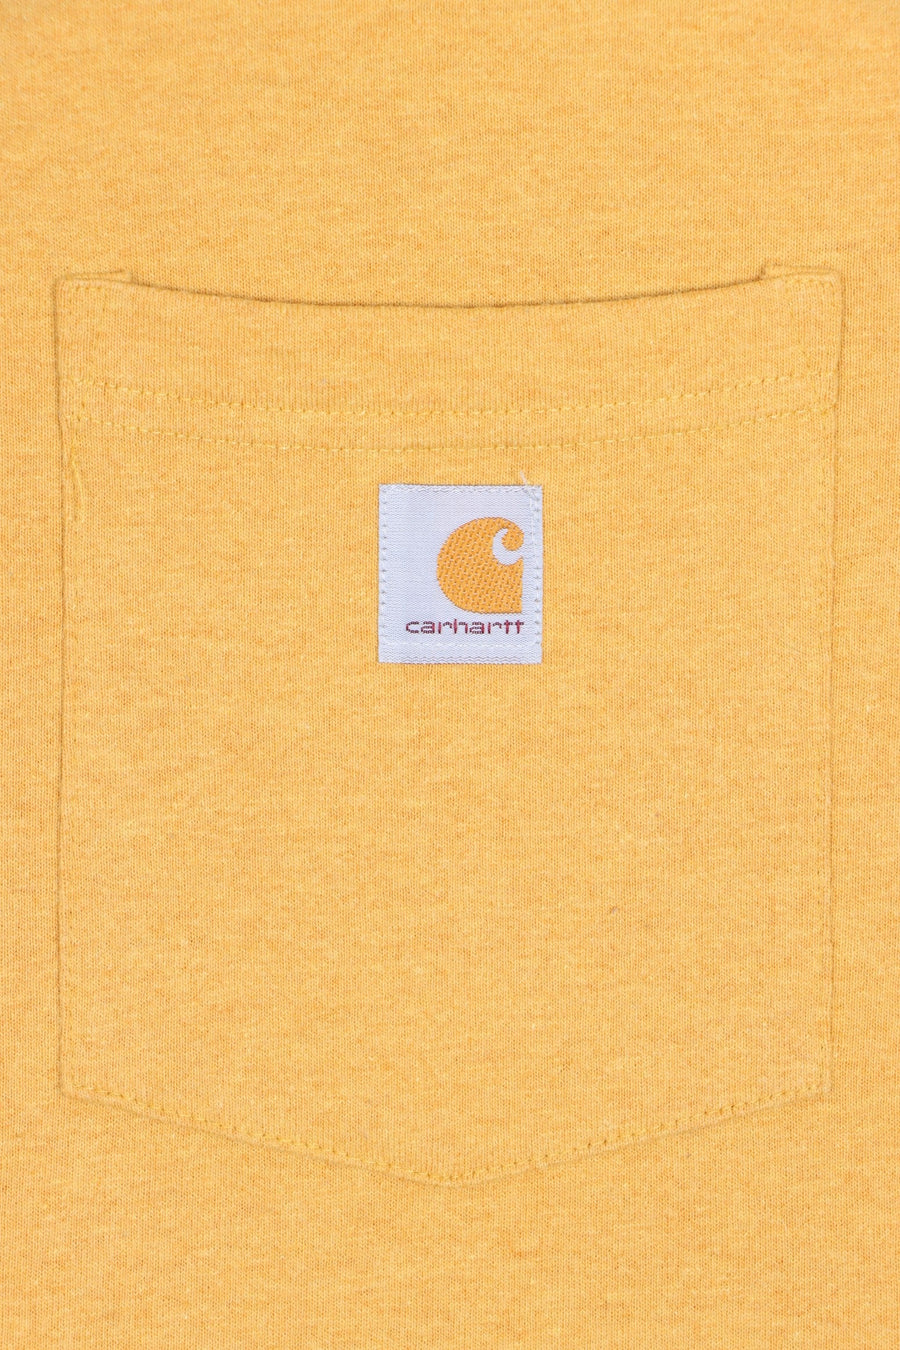 CARHARTT Mustard Yellow Front Pocket Casual Tee (M)